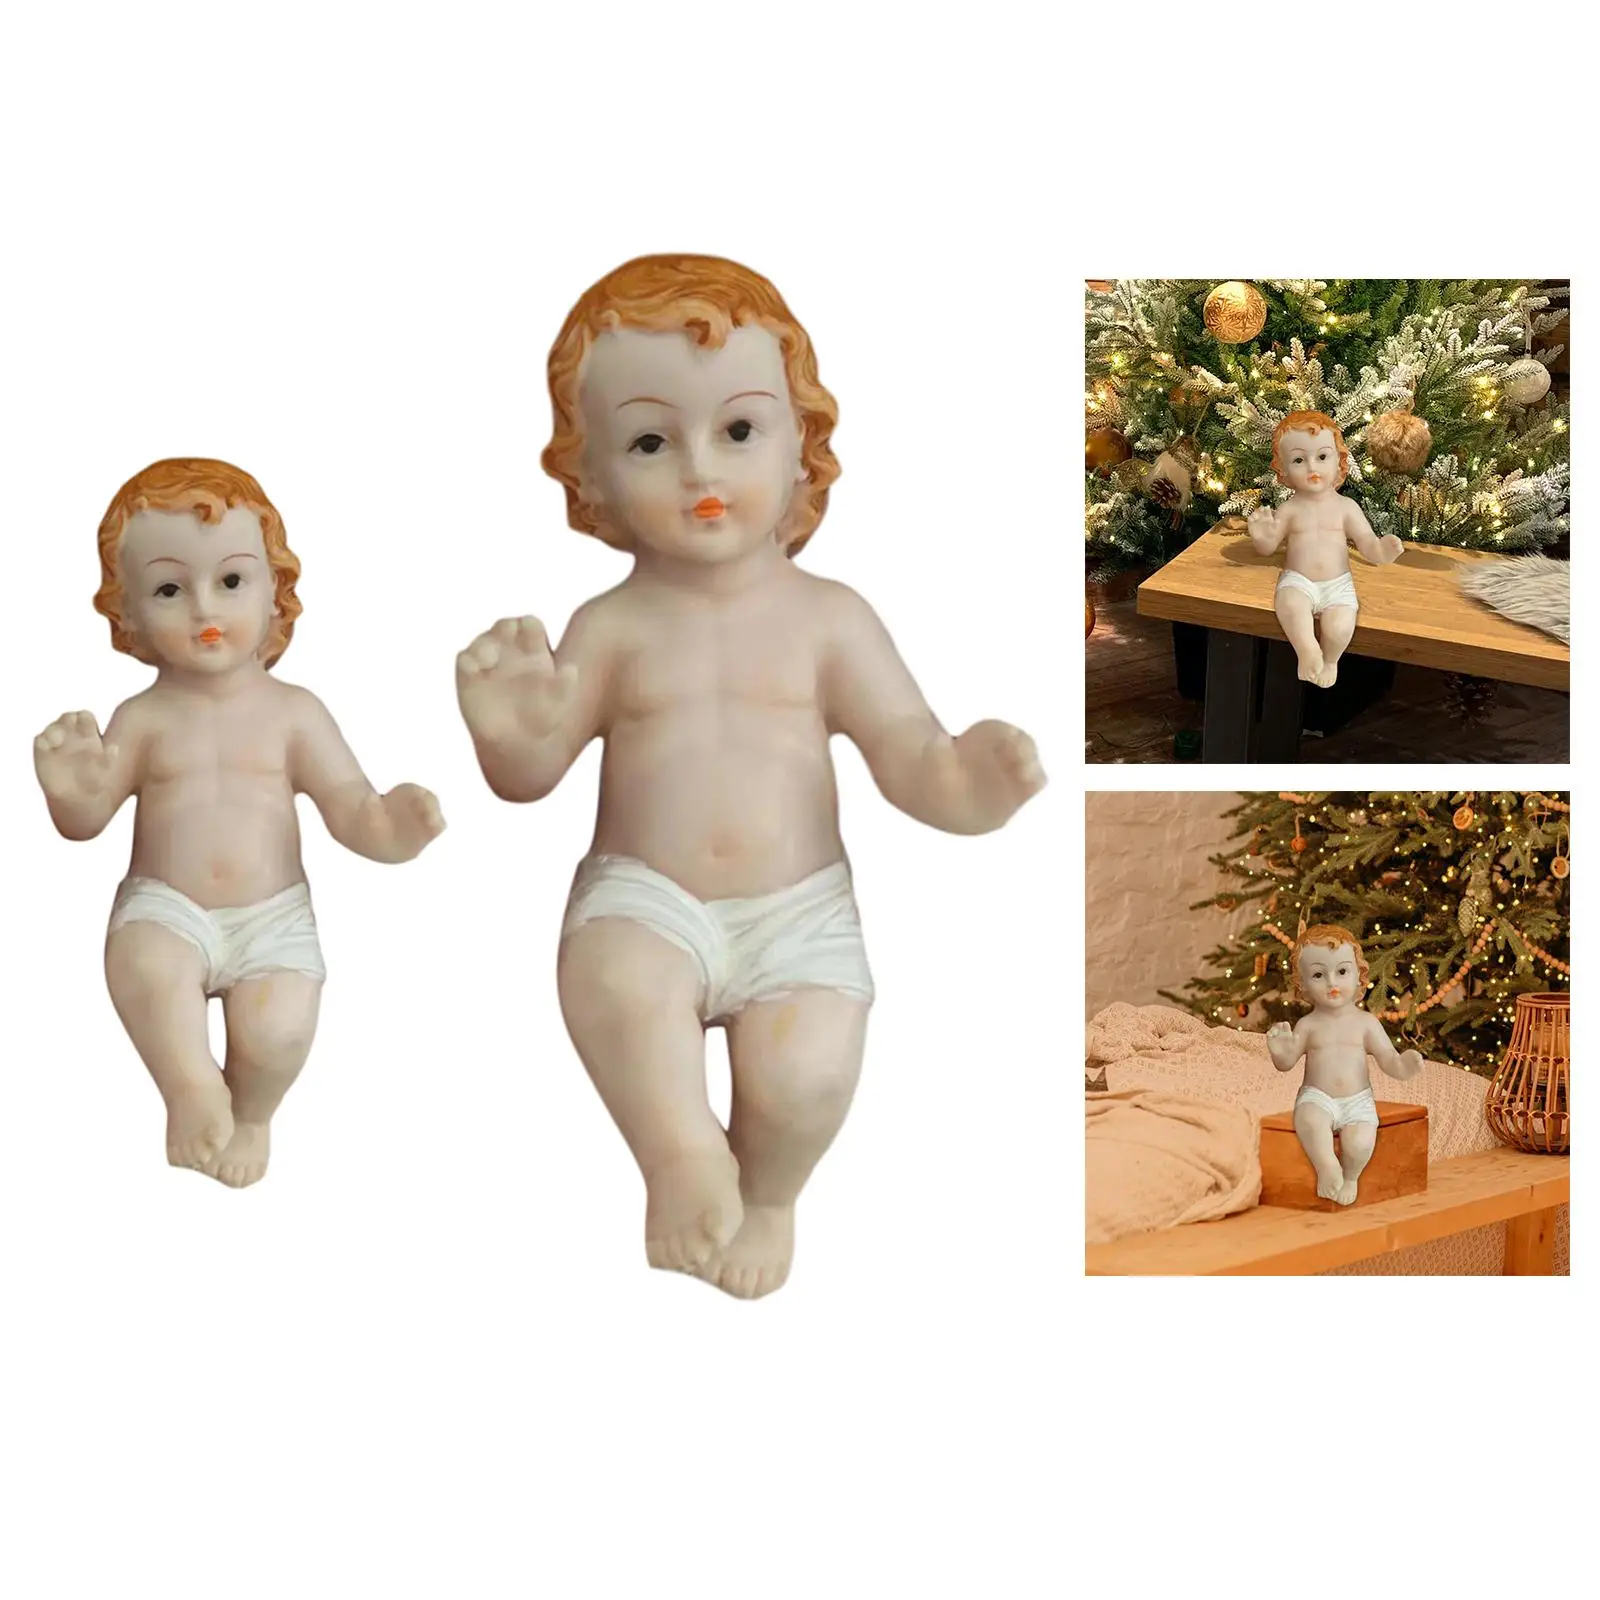 Infant Jesus Figurine Ornament Miniature for Office Decor Housewarming Gifts